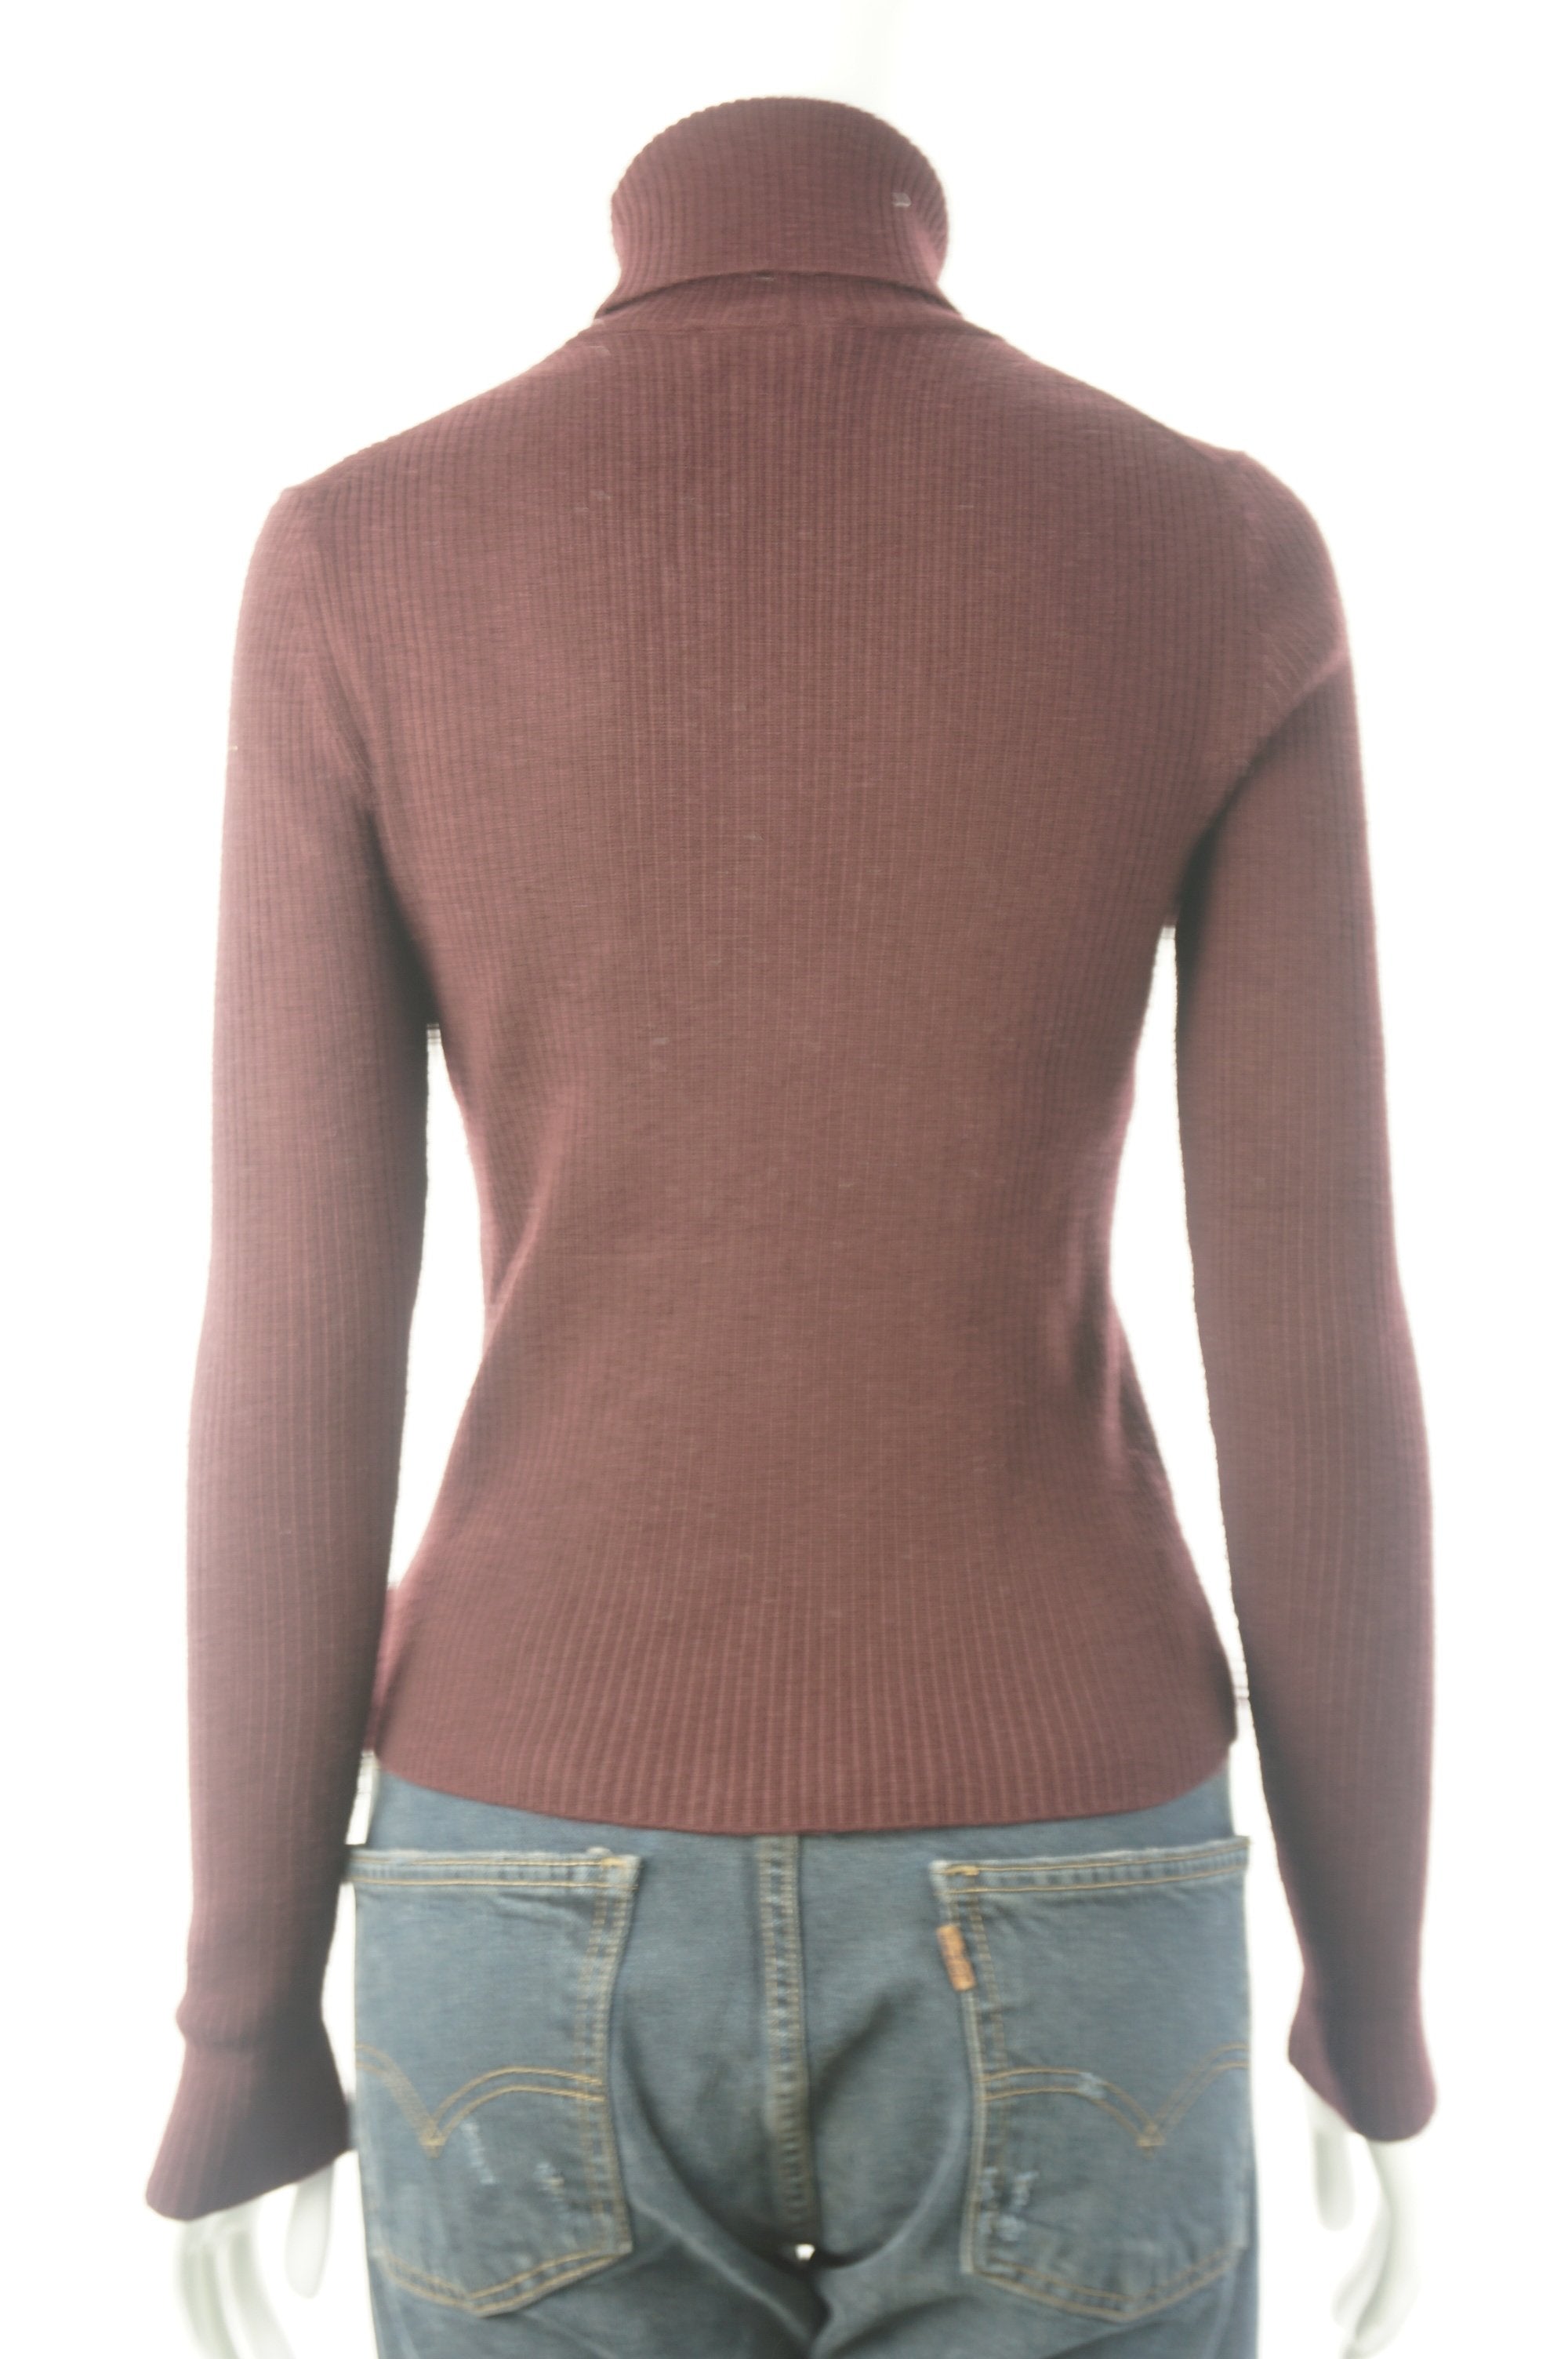 Zara Basic Burgundy Turtleneck Sweater, Long sleeve everyday turtleneck sweater. Tight fit to easily go under your jacket., Red, 46% viscose, 28% Nylon, 26% polyester, women's Tops, women's Red Tops, Zara women's Tops, women's turtleneck sweater, zara women's basic winter sweater, zara women's long sleeve turtleneck sweater,